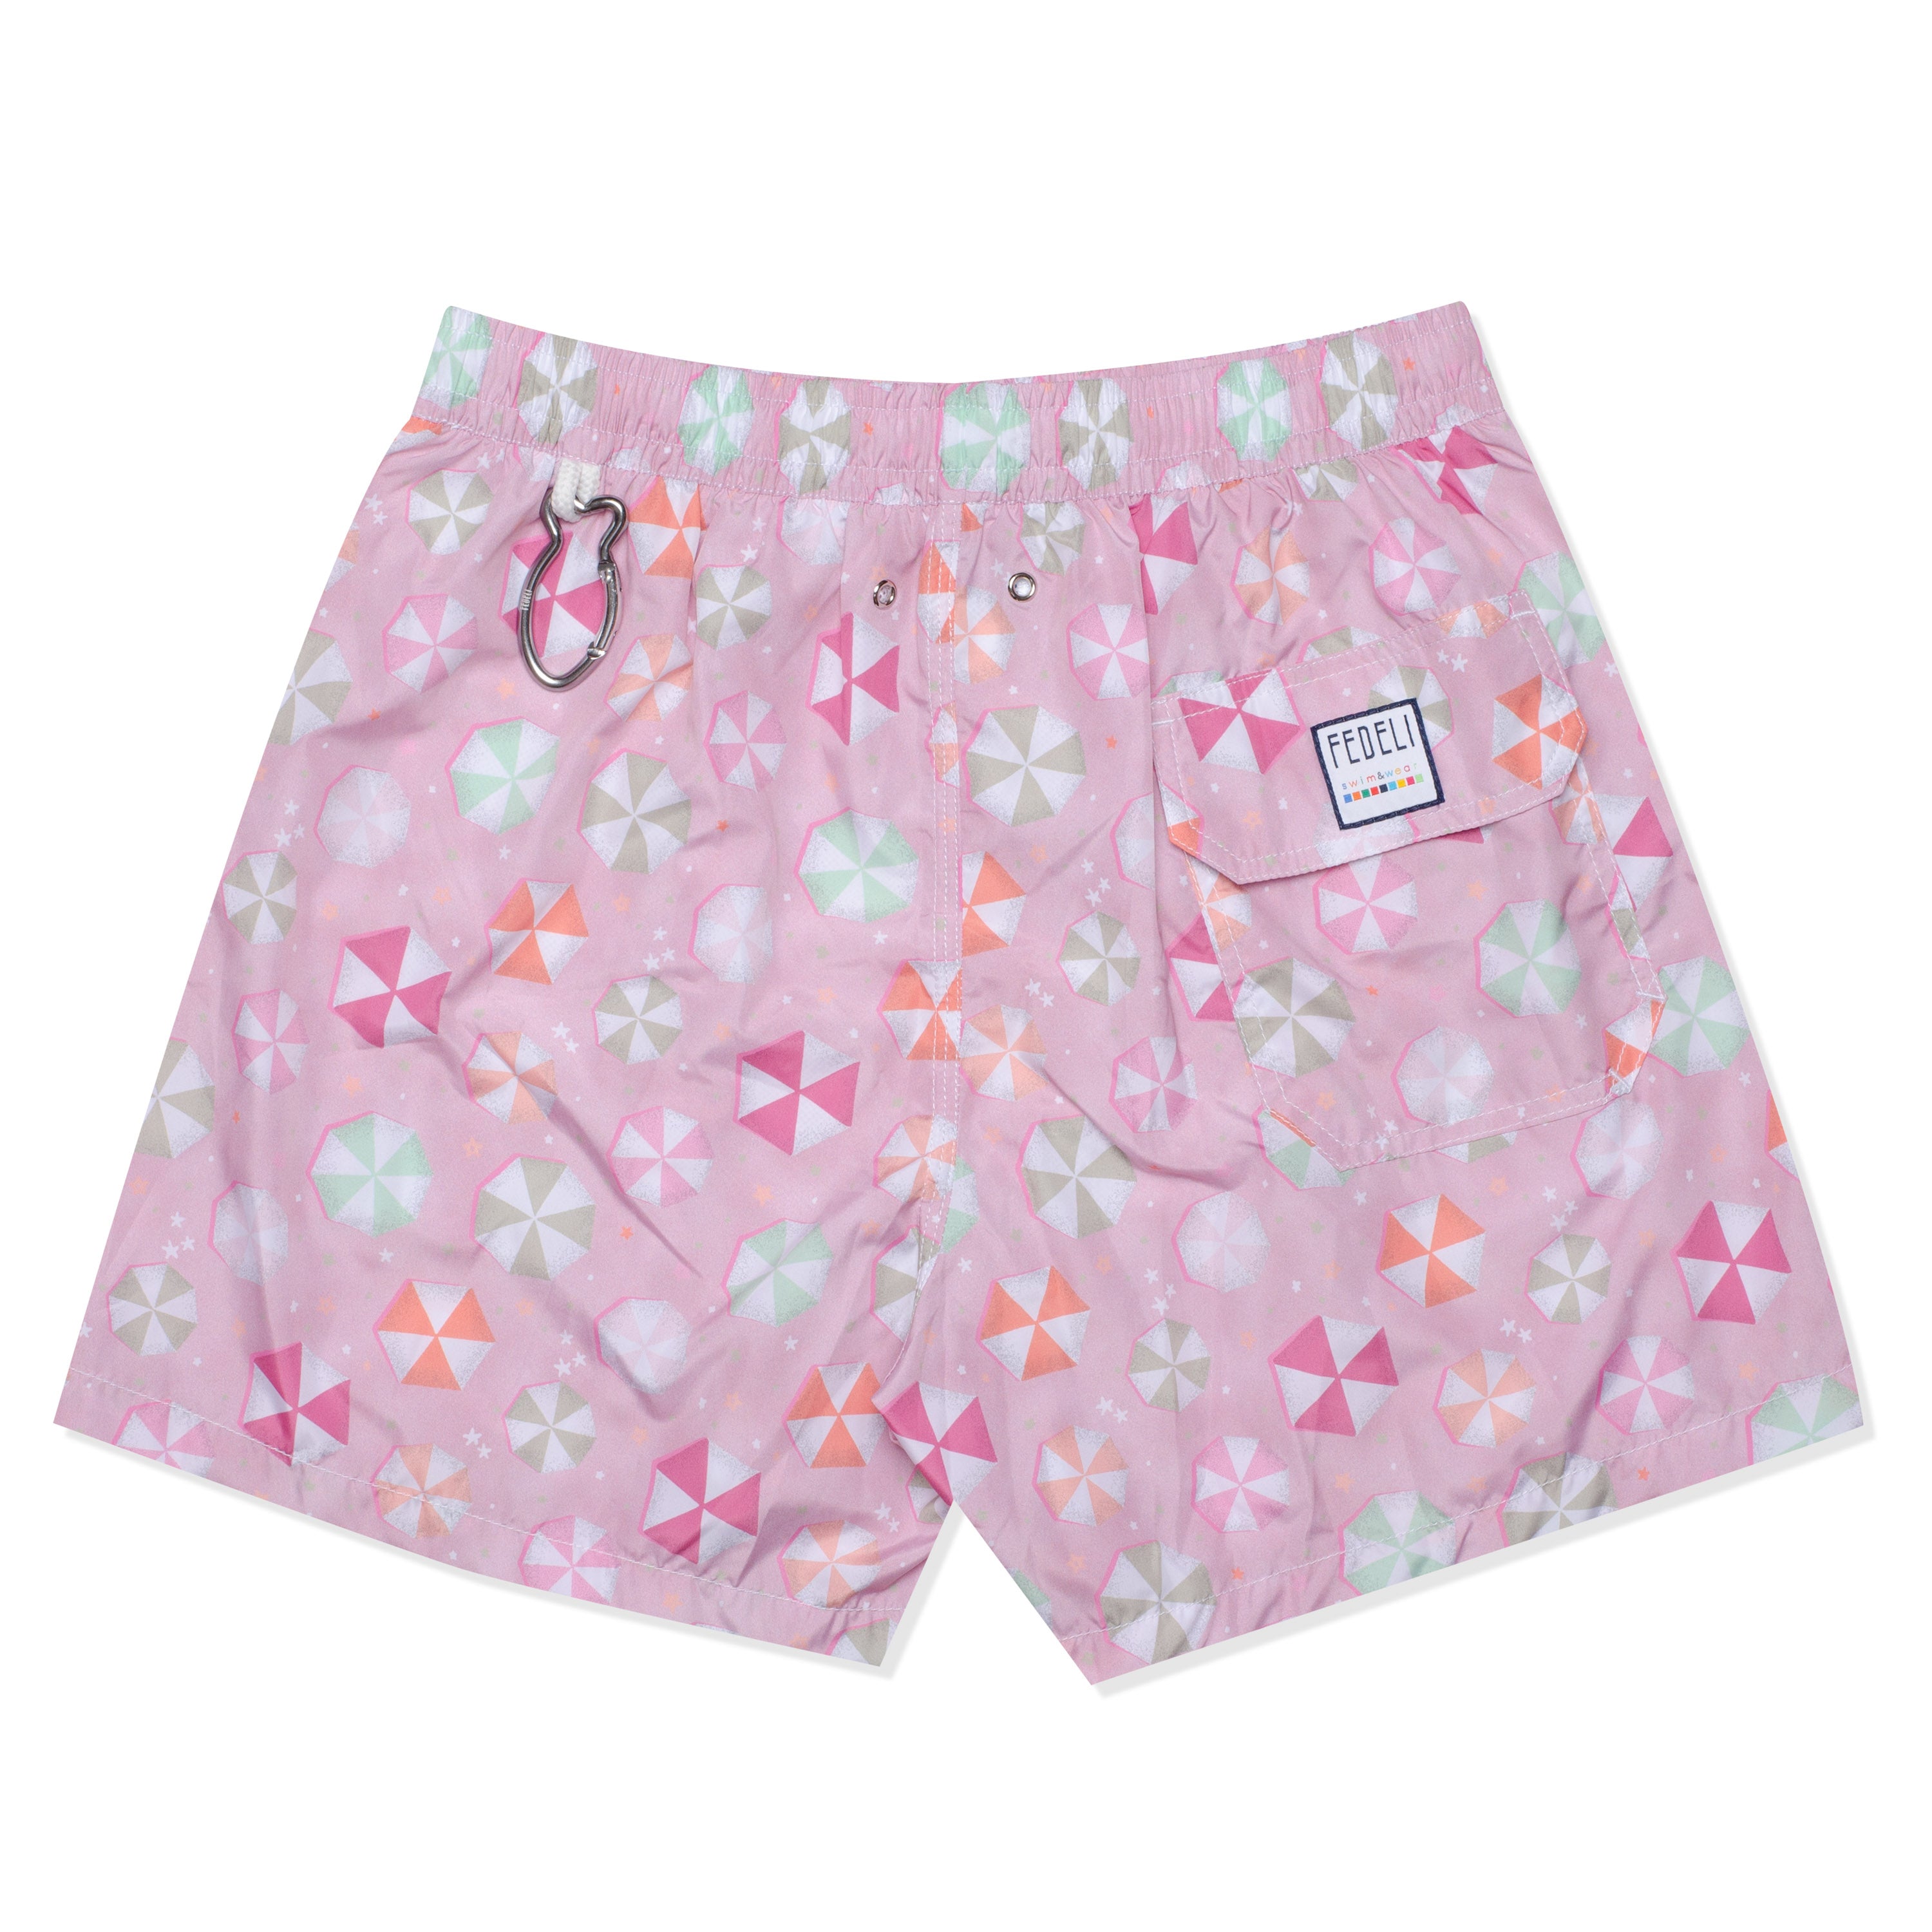 FEDELI Pink Beach Umbrella Madeira Airstop Swim Shorts Trunks NEW Size XL FEDELI